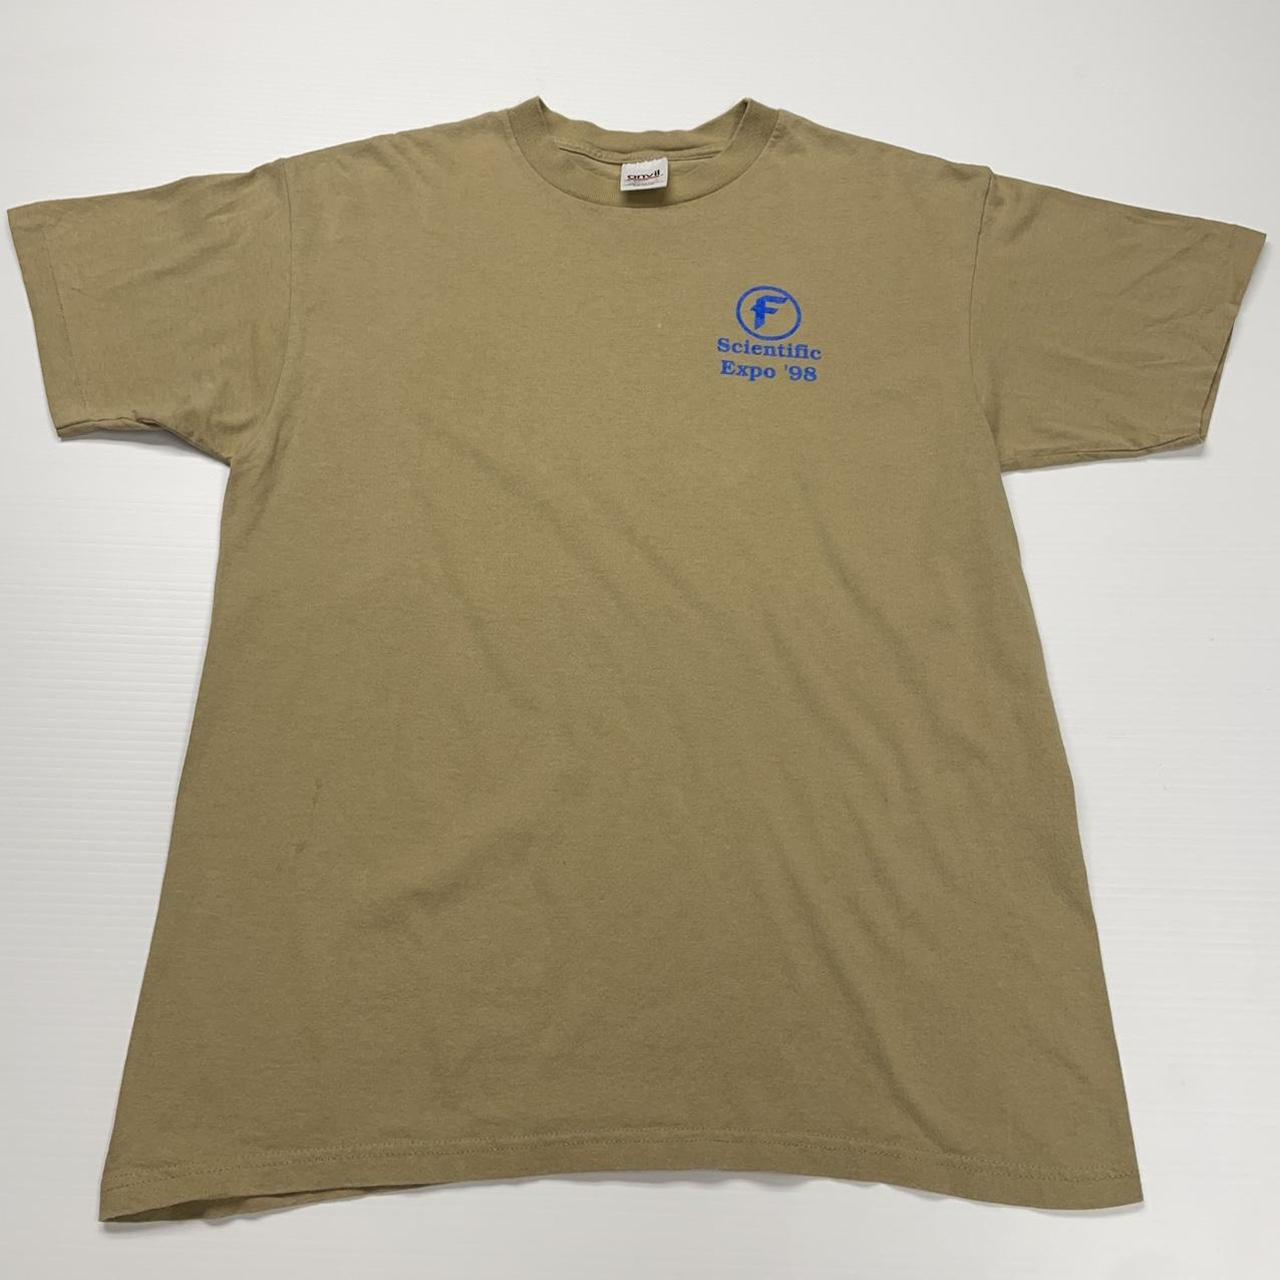 Men's Tan and Blue T-shirt (2)